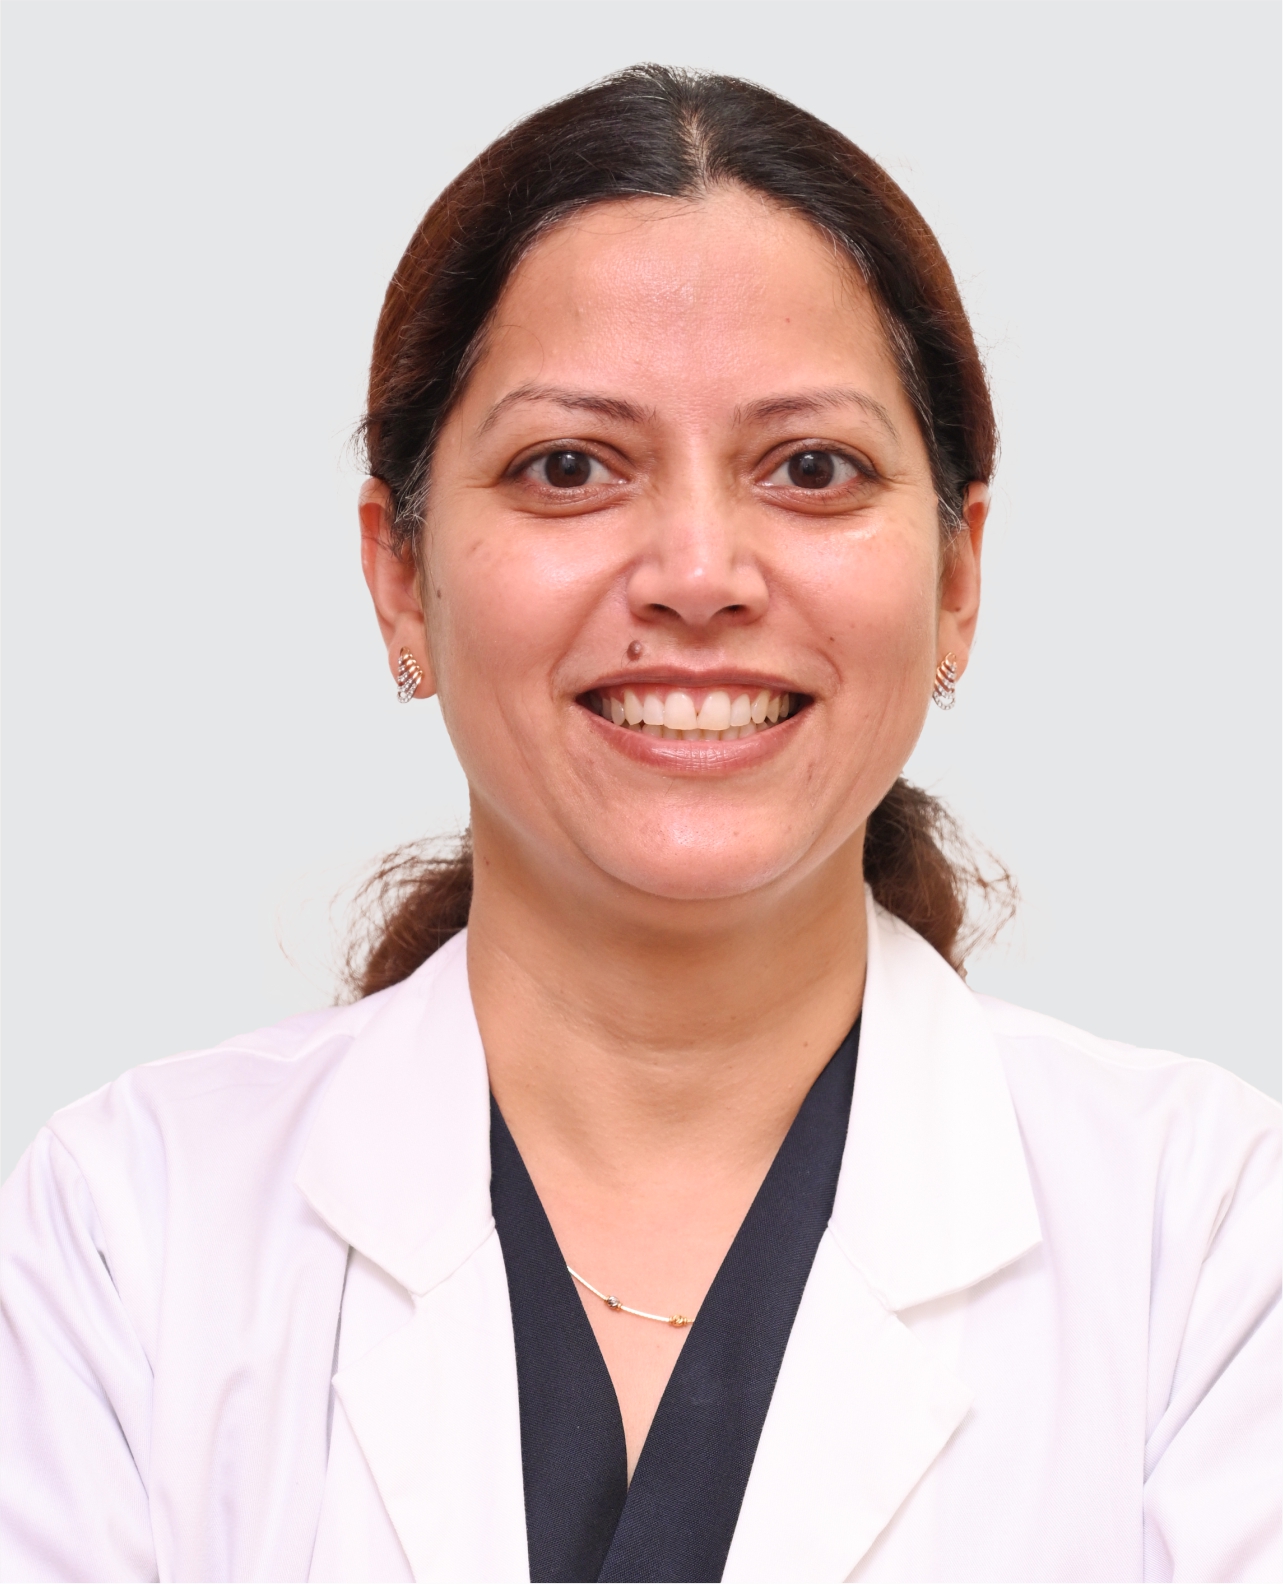 Dr. Amita Naithani